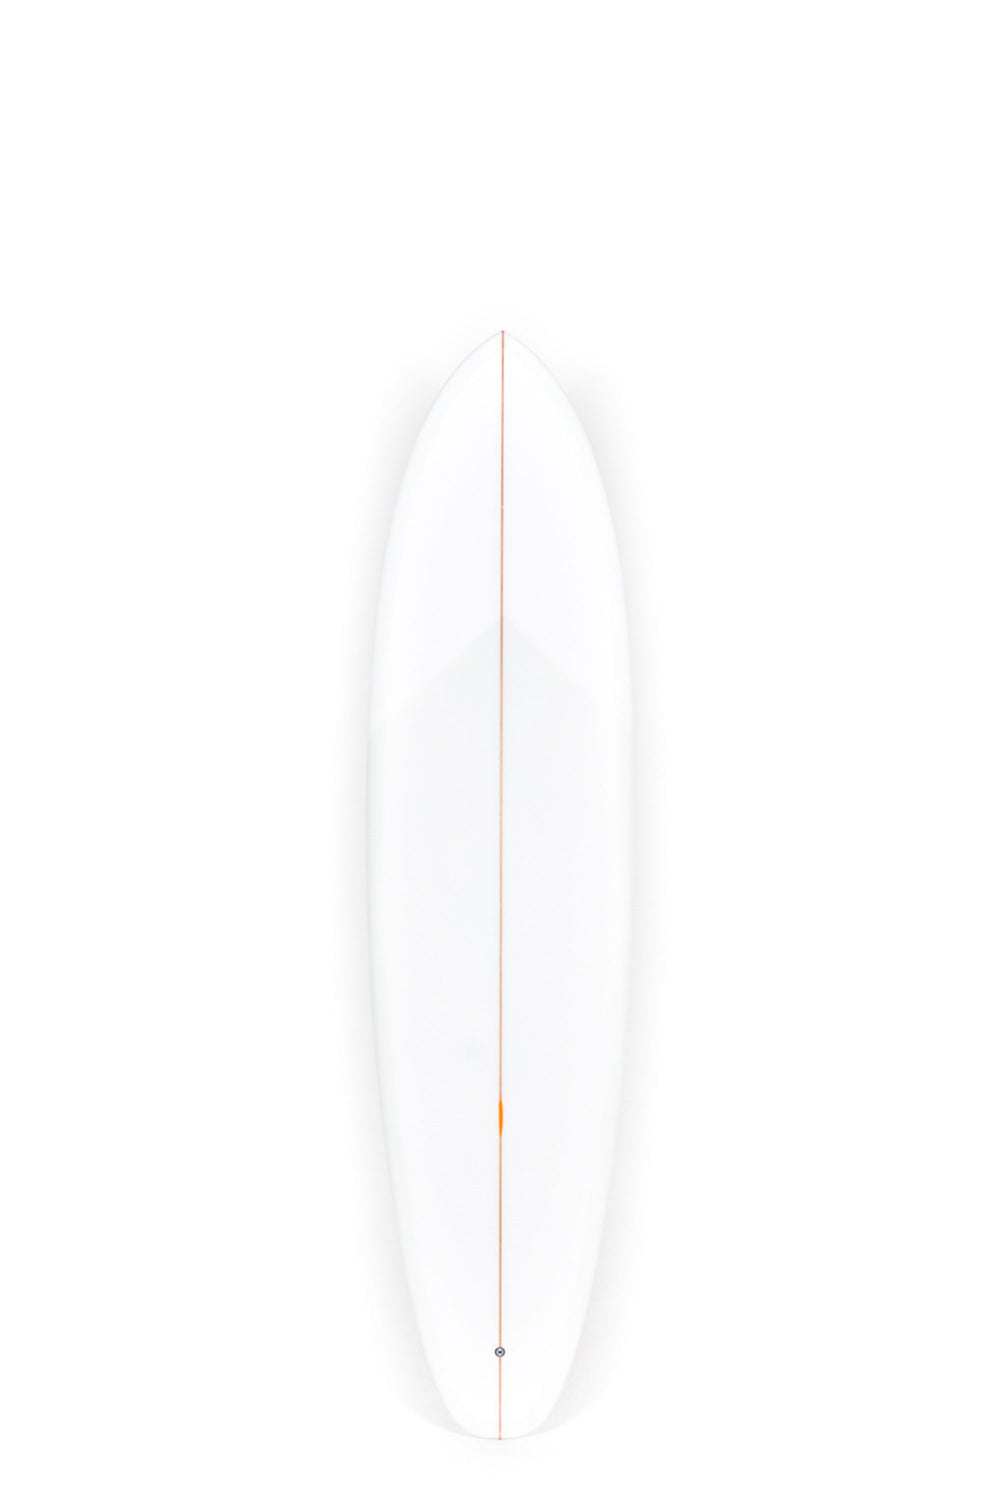 Pukas-Surf-Shop-Christenson-Surfboards-Flat-Tracker-20-7_2_-CX02226